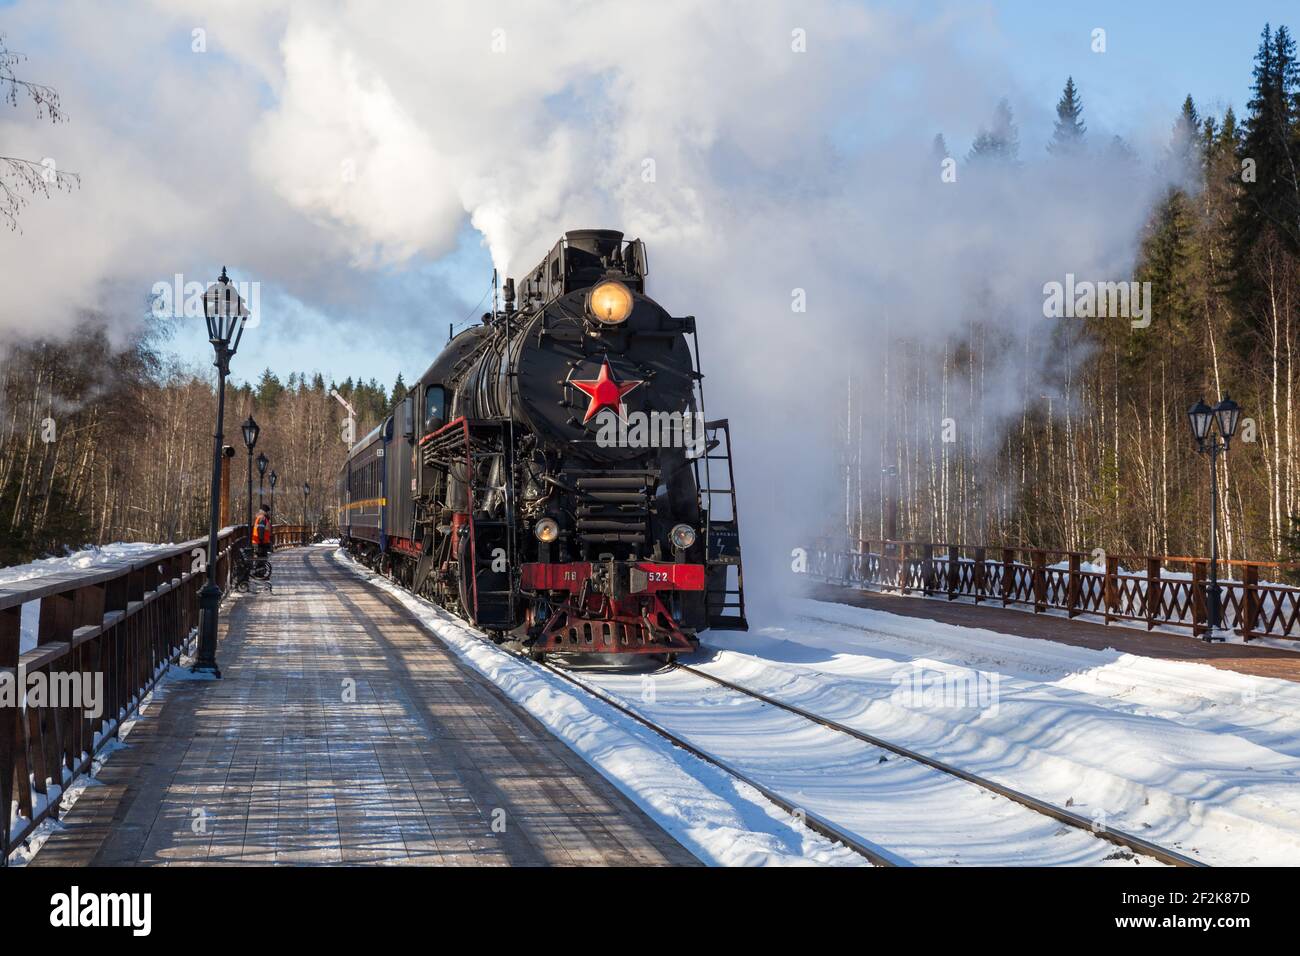 RUSKEALA, RUSSIA - MARCH 10, 2021: Tourist retro train Ruskeala Express on steam locomotive arrives at the station Gorny Park Ruskeala Stock Photo